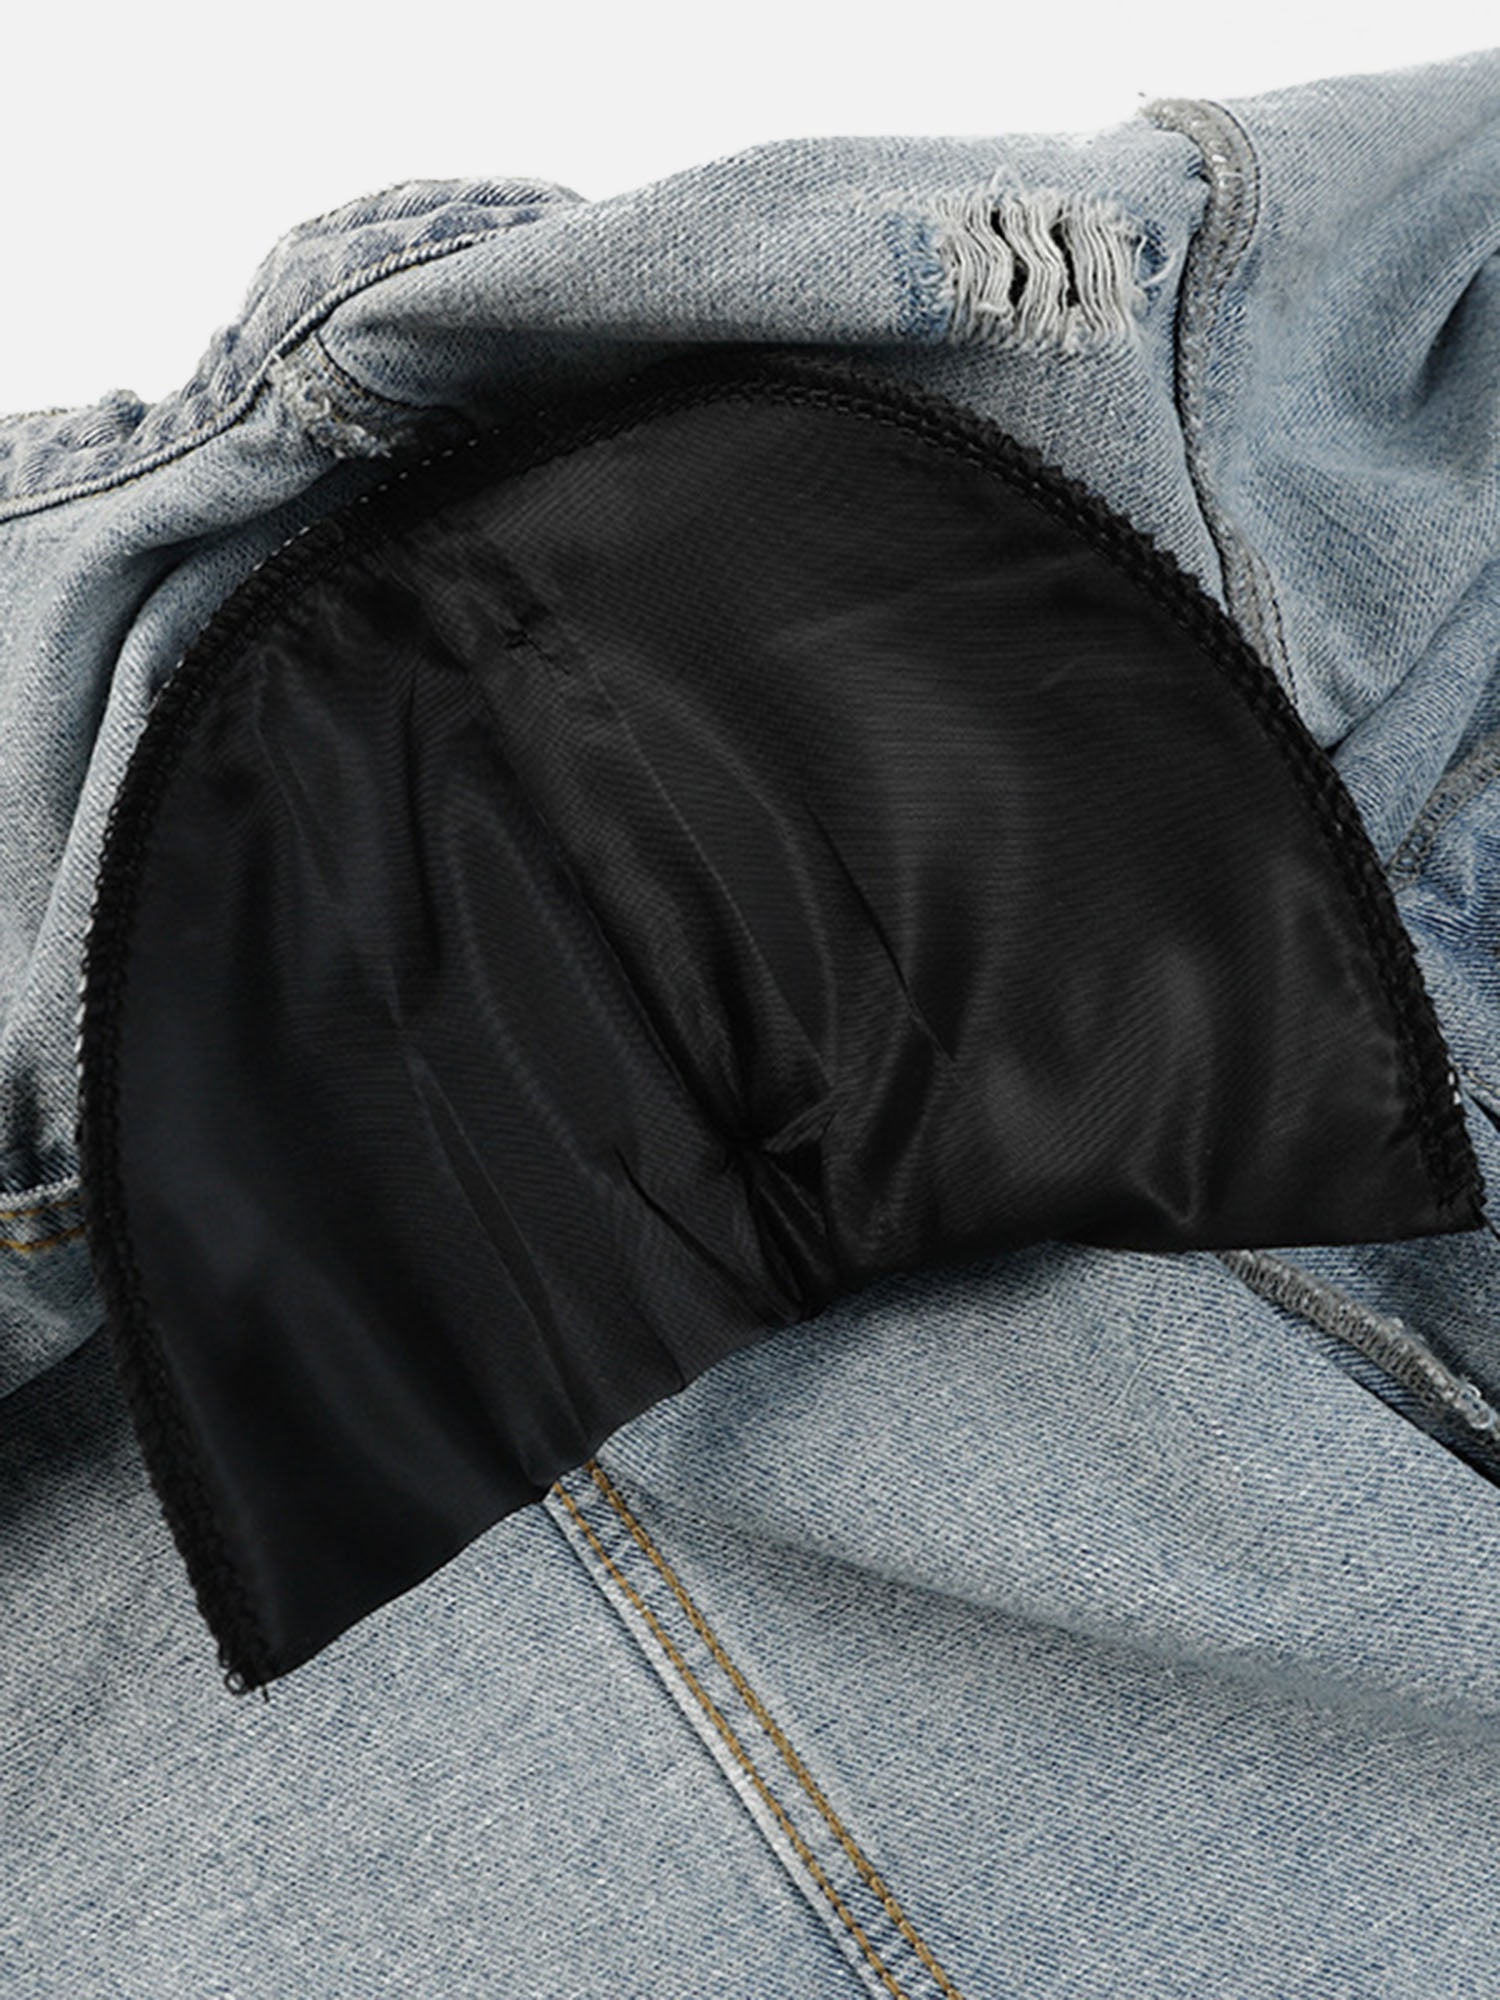 Thesupermade American Street Fashion Heavy Duty Washed Denim Jacket